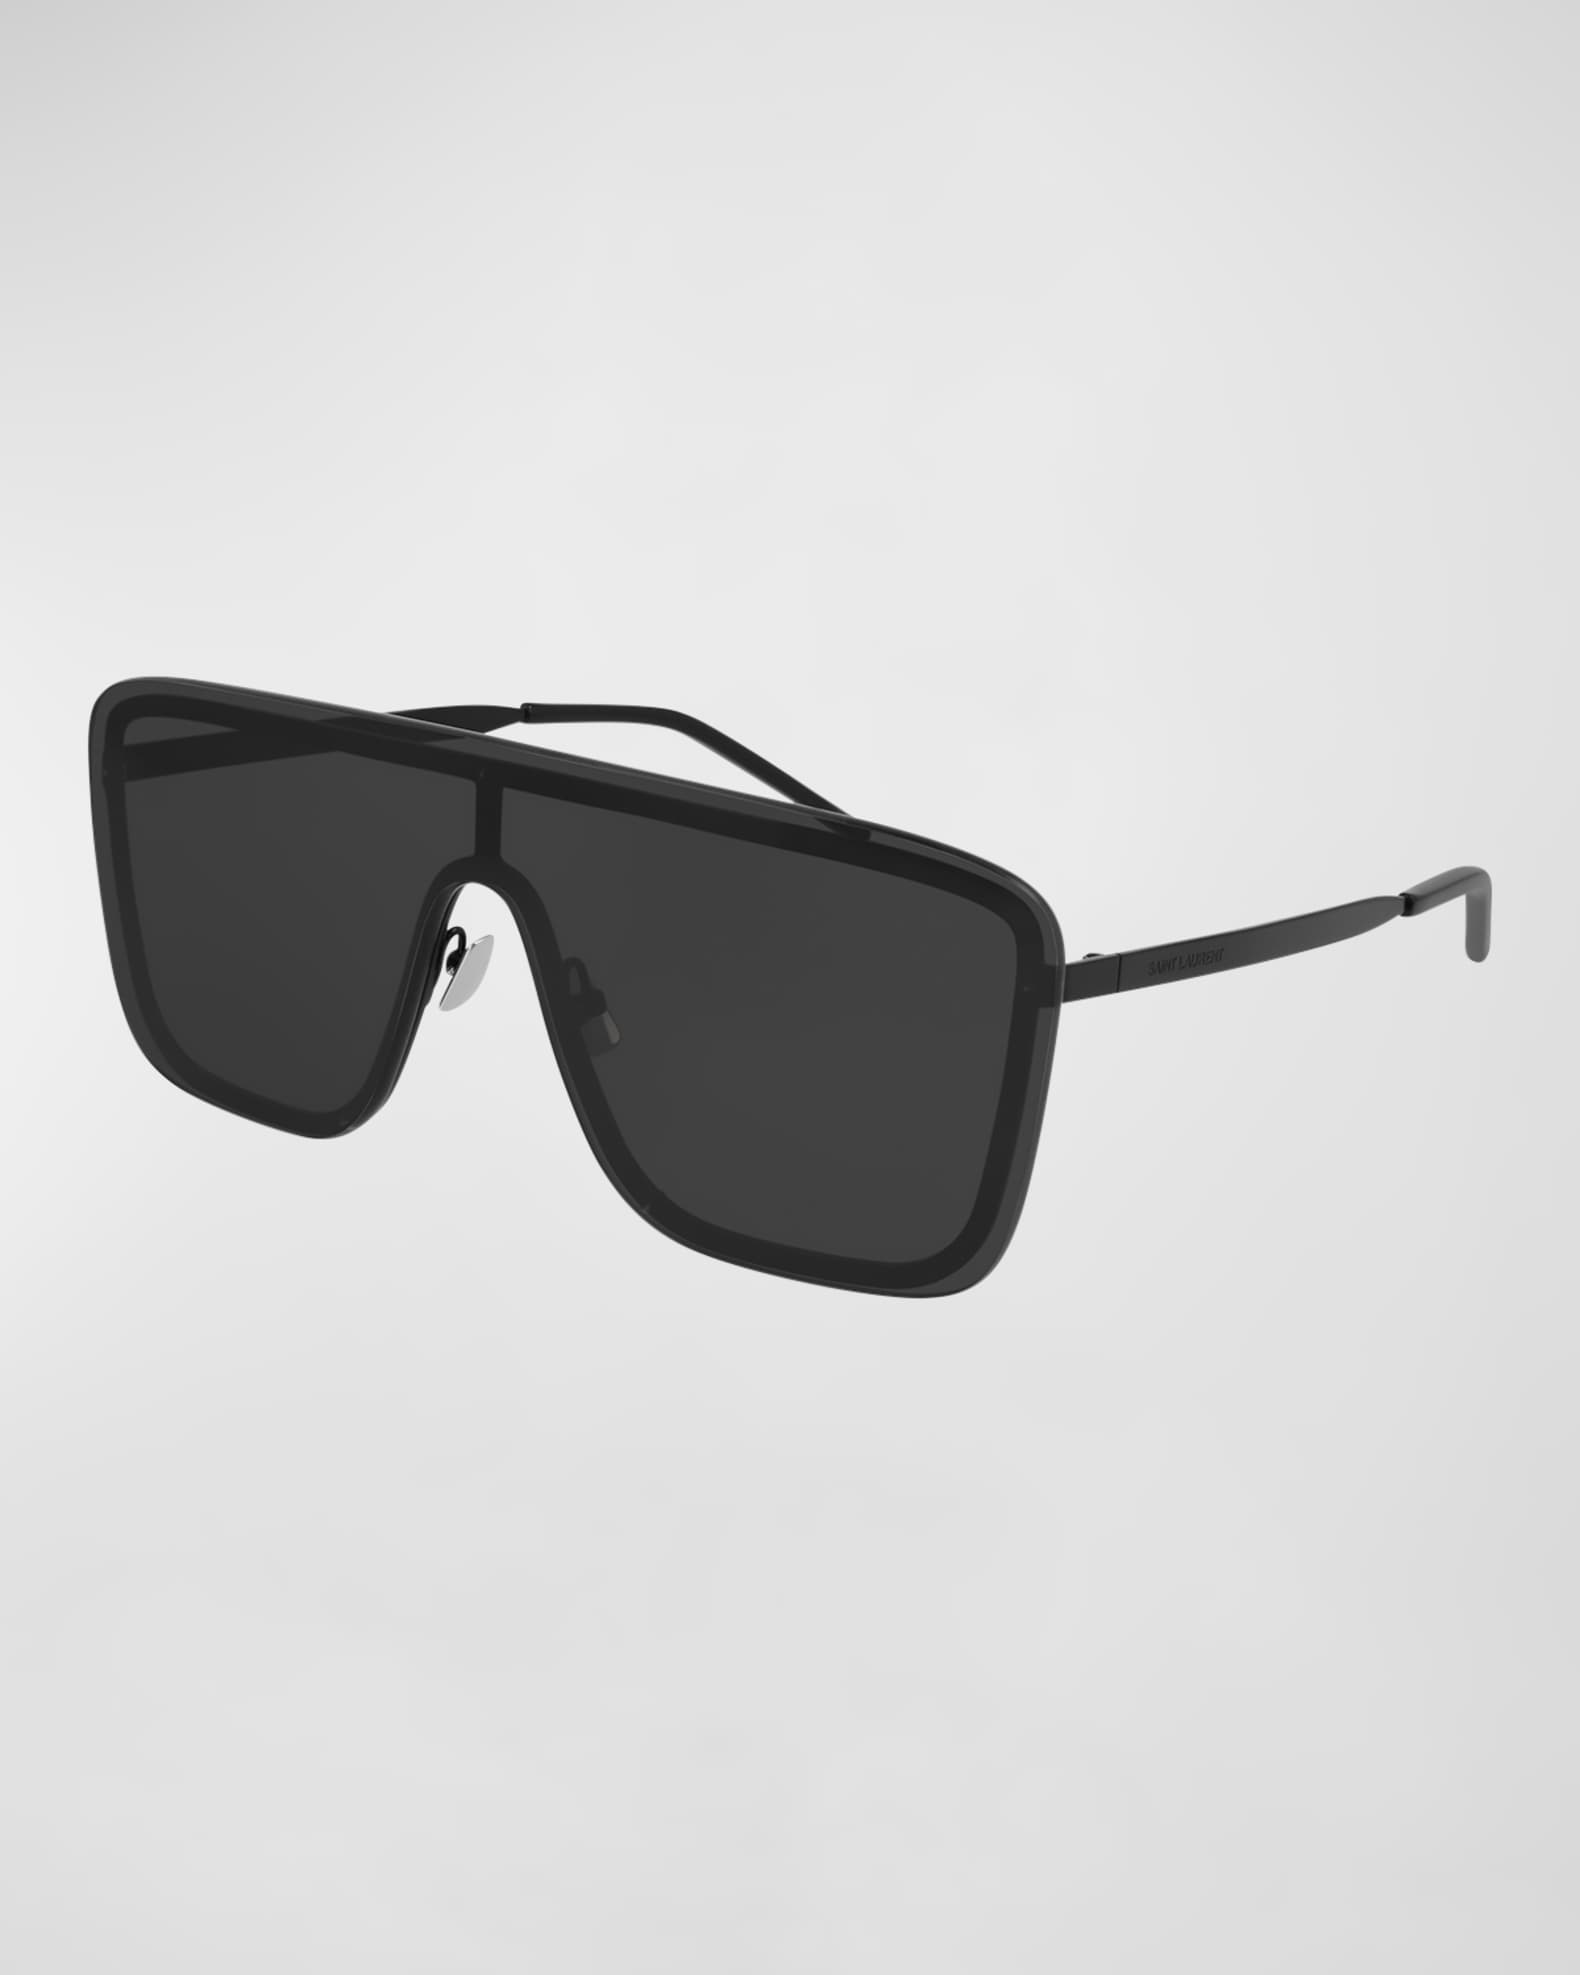 Louis Vuitton Shield Mirrored Sunglasses